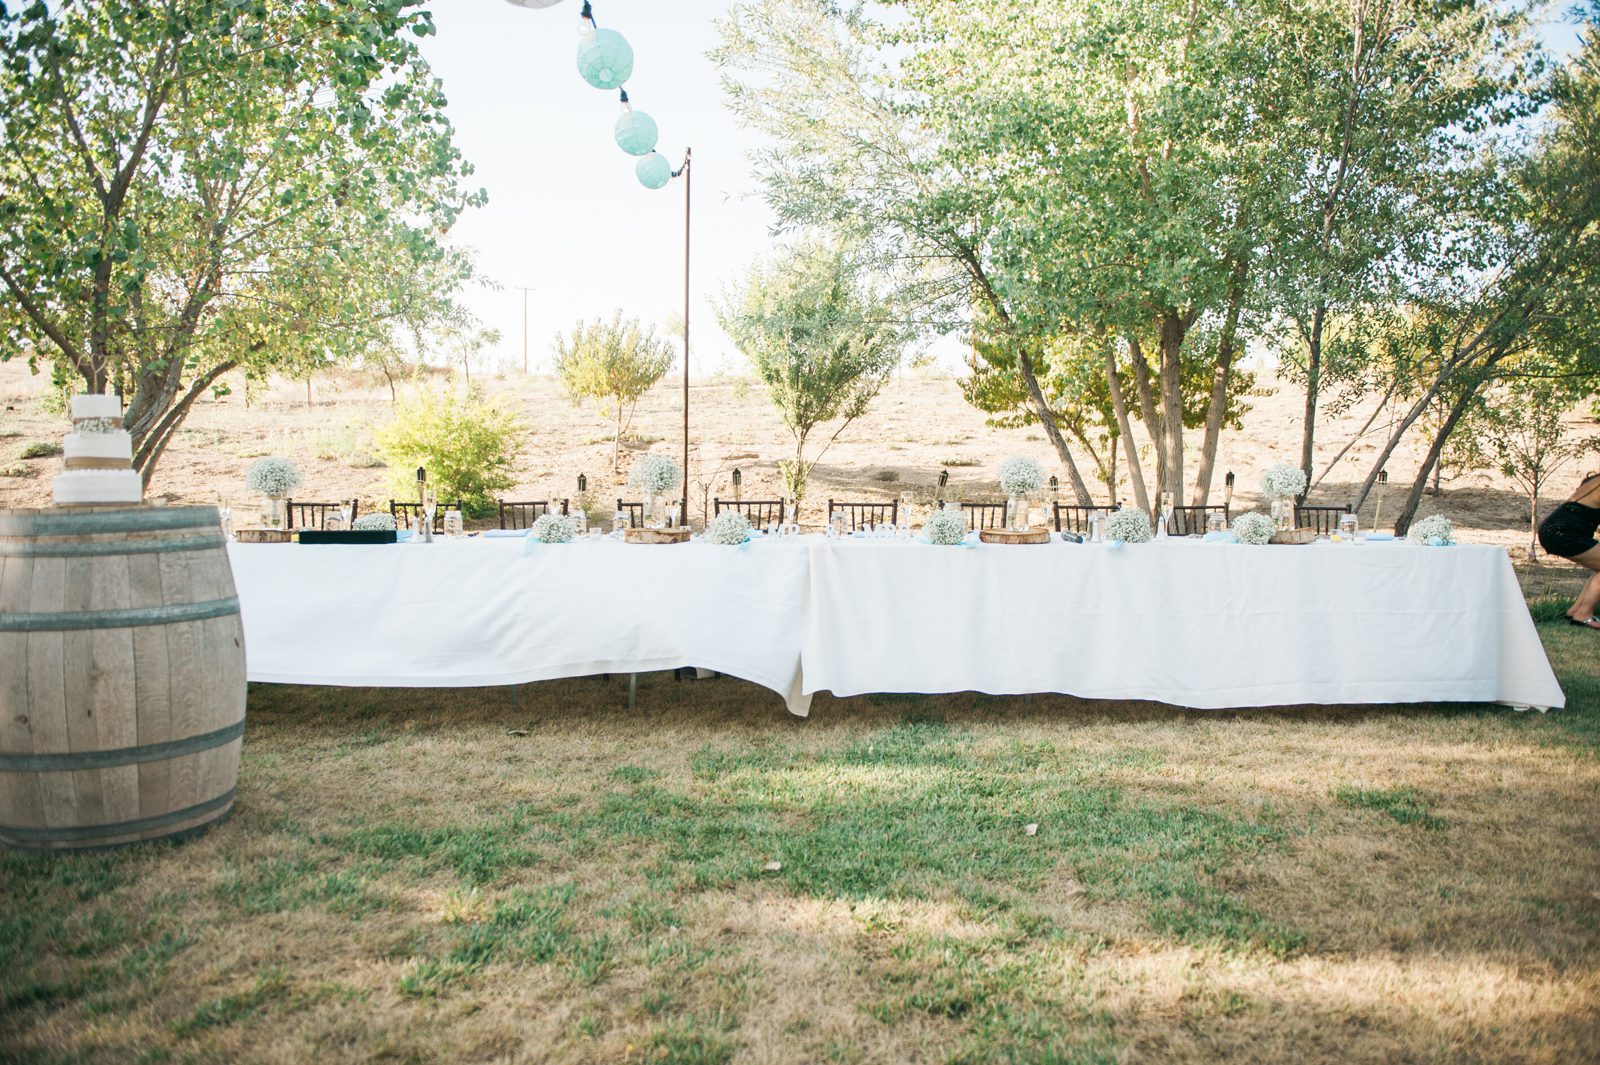 Table scape at Hartley Farm Wedding by San Luis Obispo Wedding photographer Yvonne Goll Photography